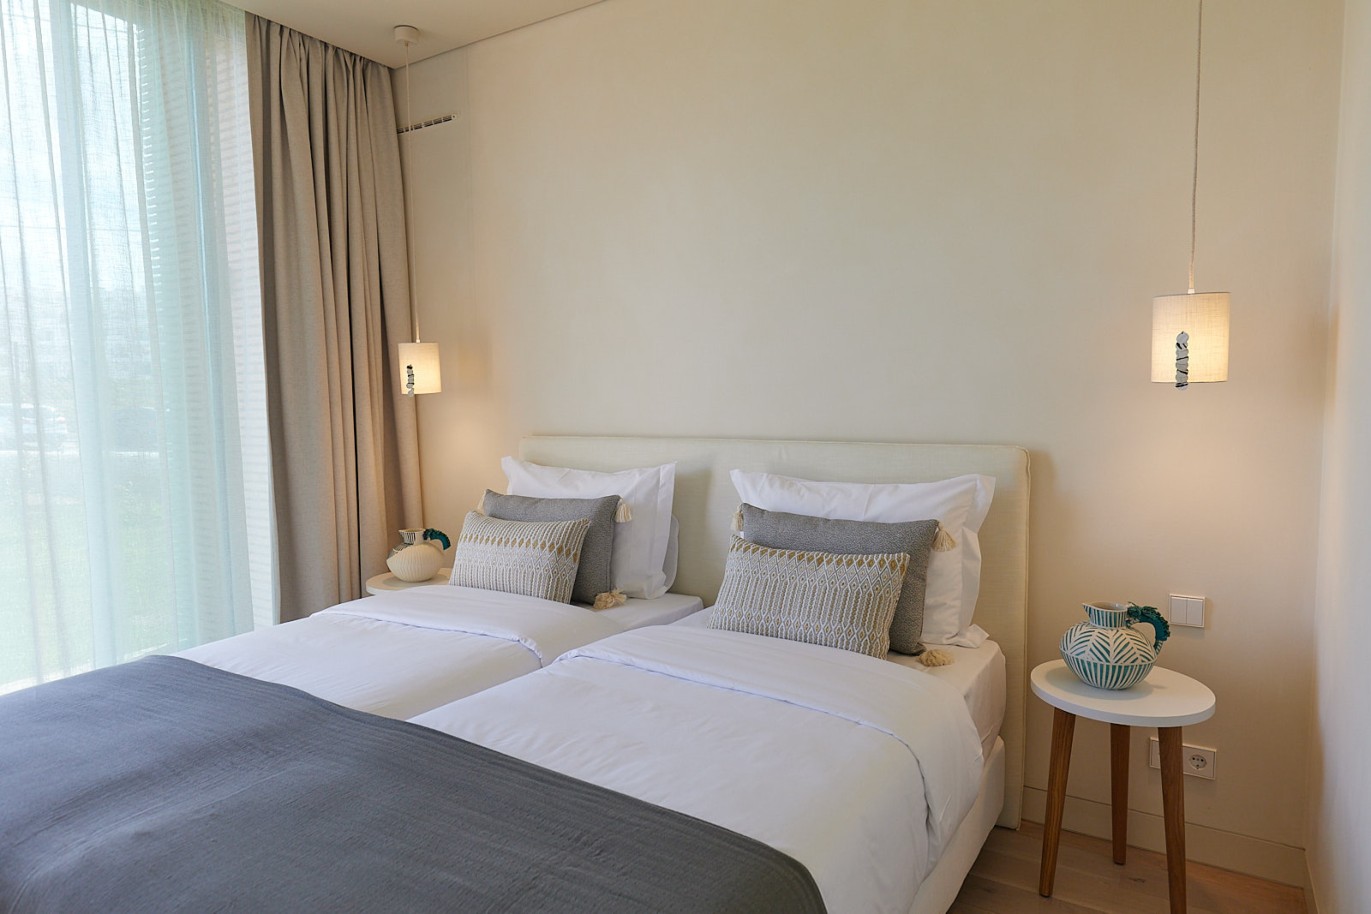 2 bedroom apartment in resort, for sale in Porches, Algarve_228833